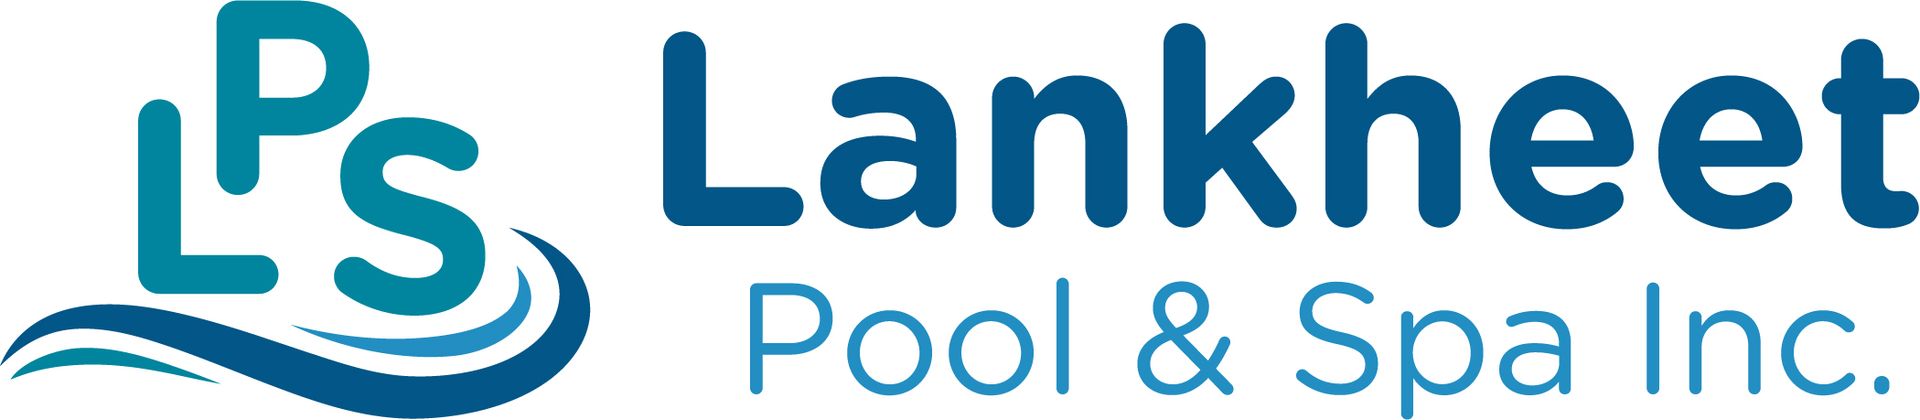 Lankheet Pool & Spa Inc.-Logo